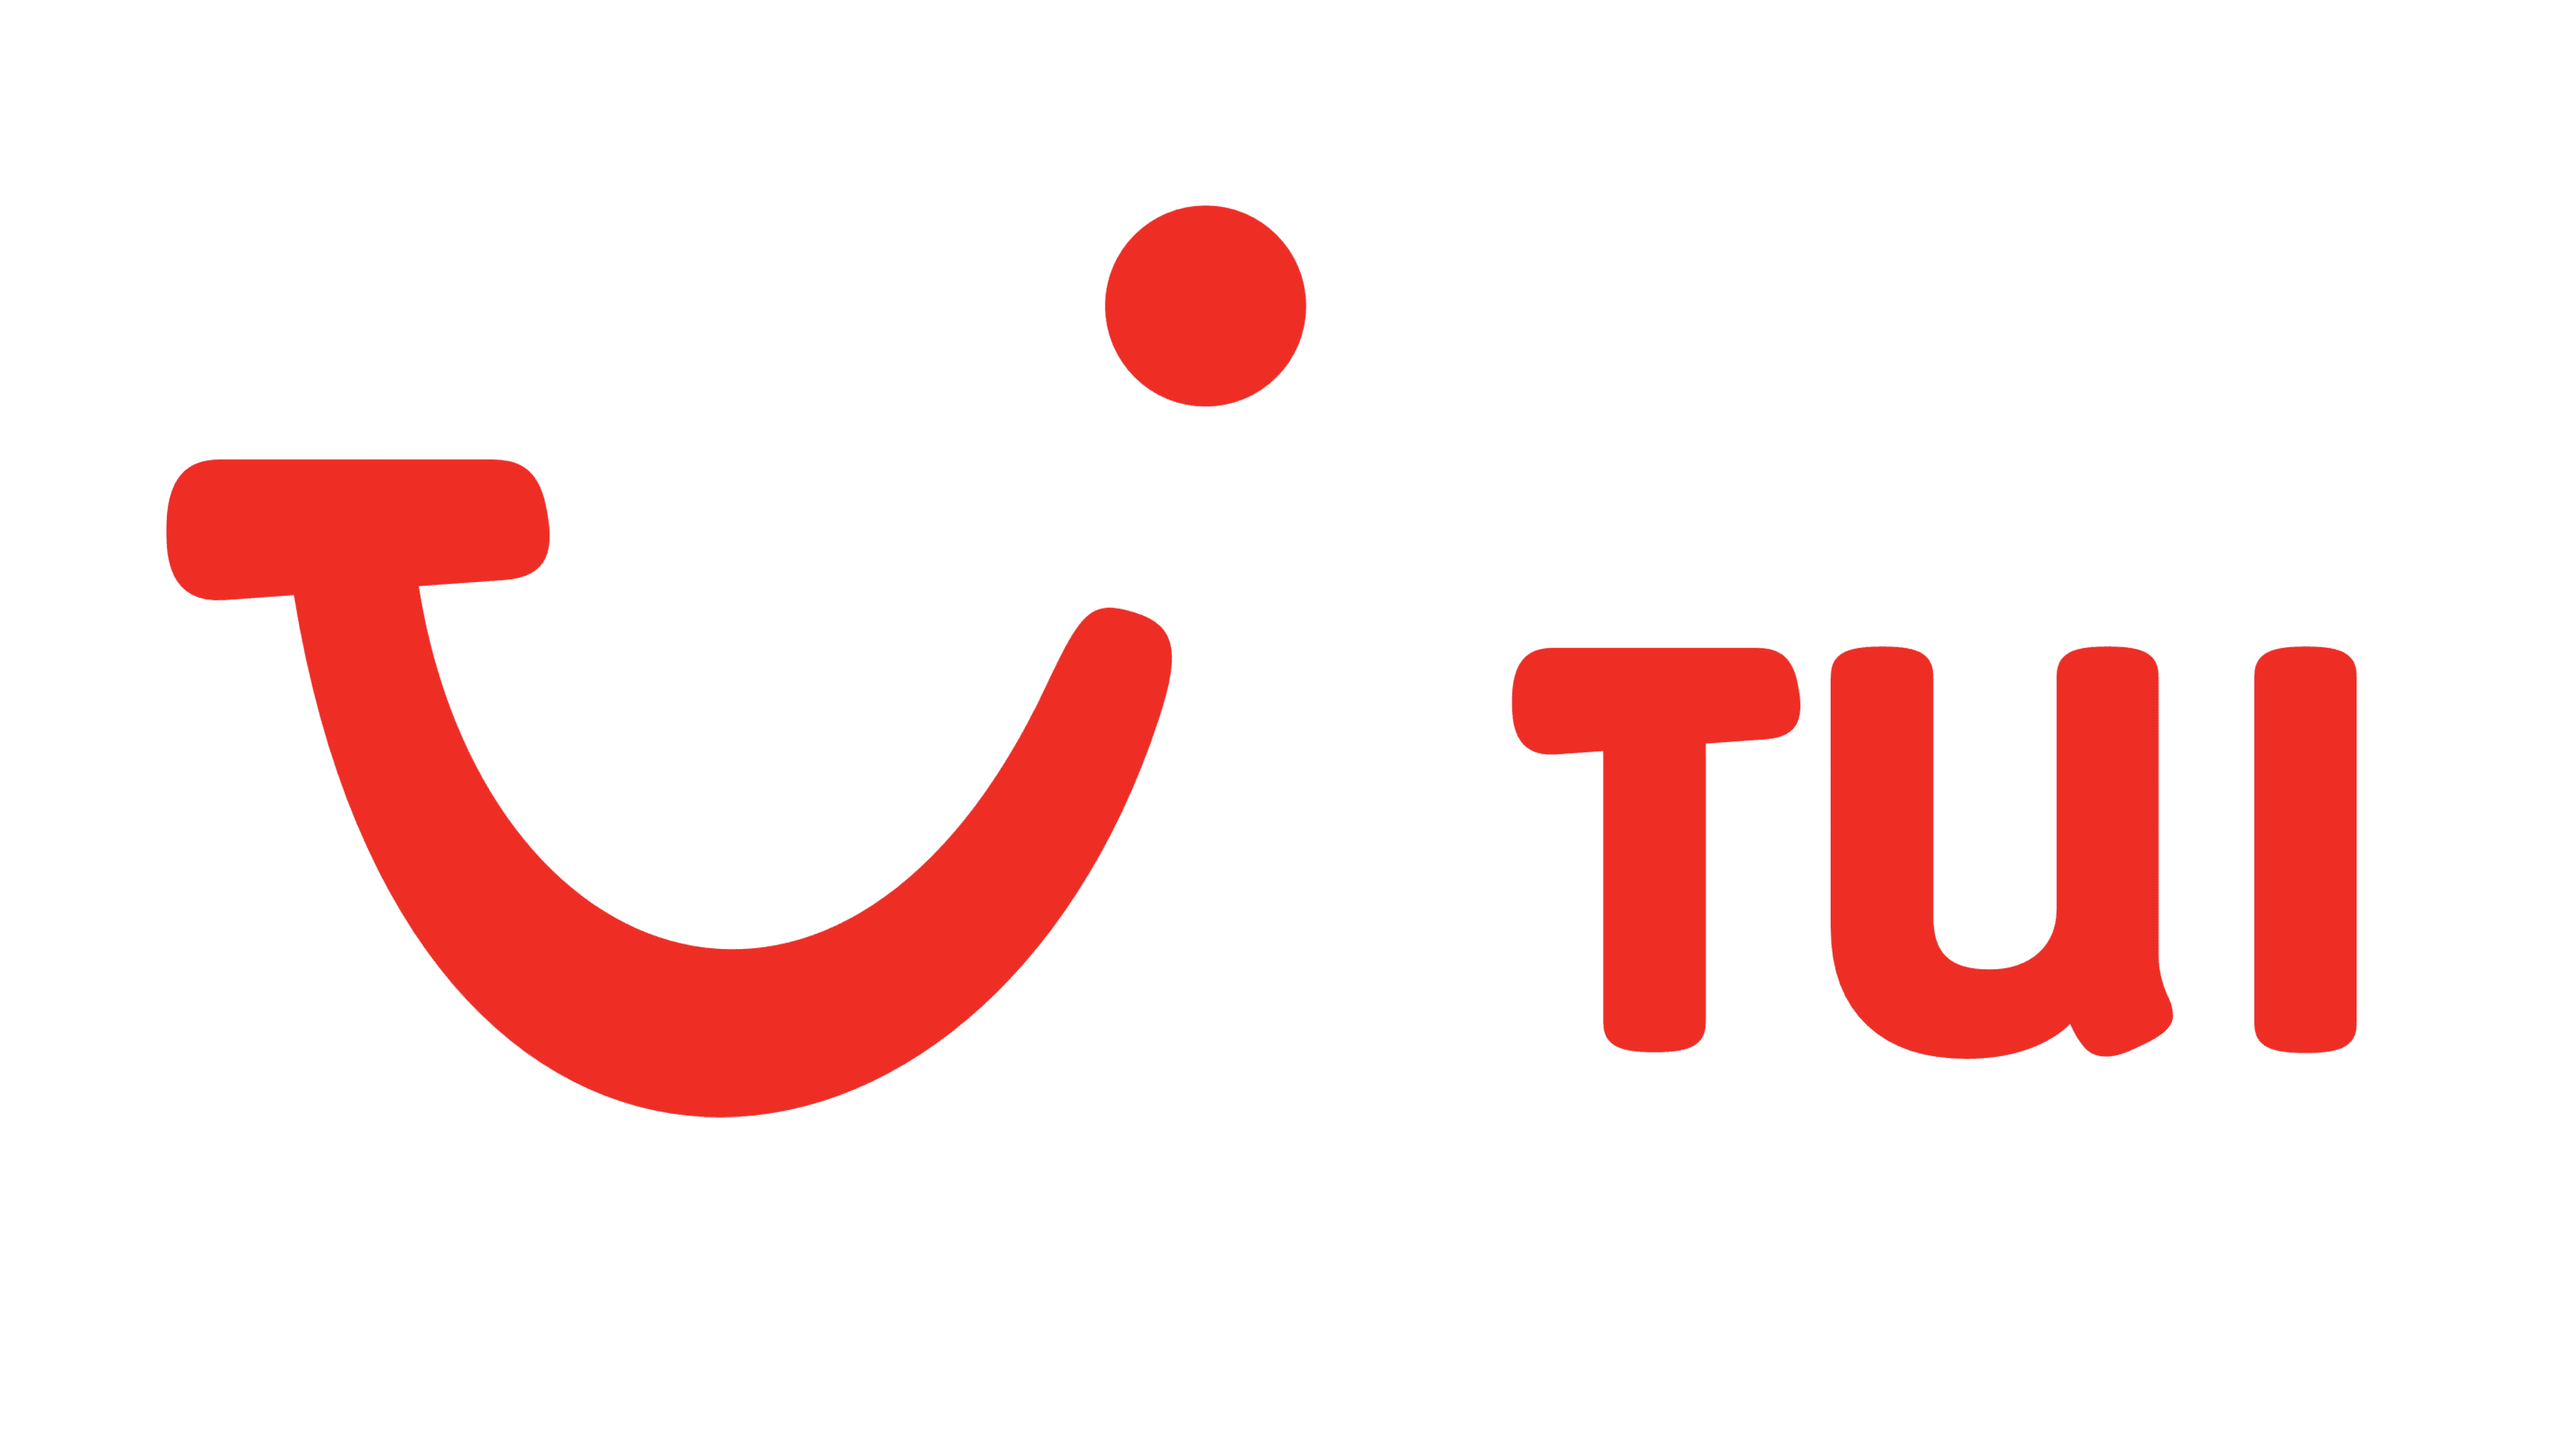 TUI Airways logo